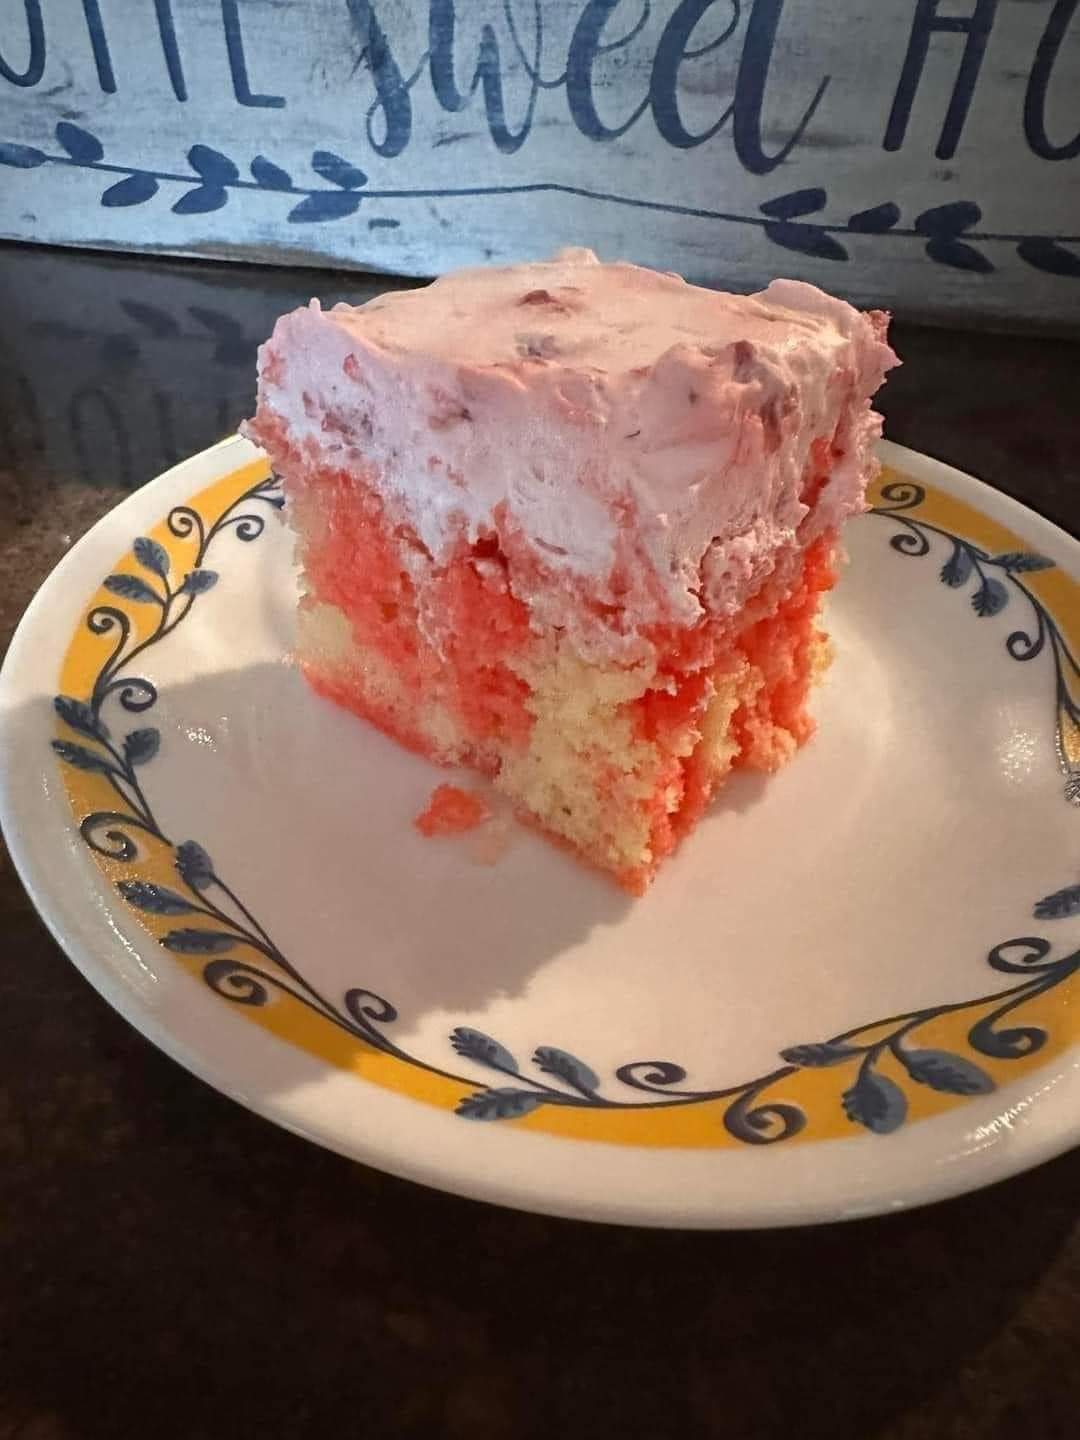 Best Strawberry Poke Cake